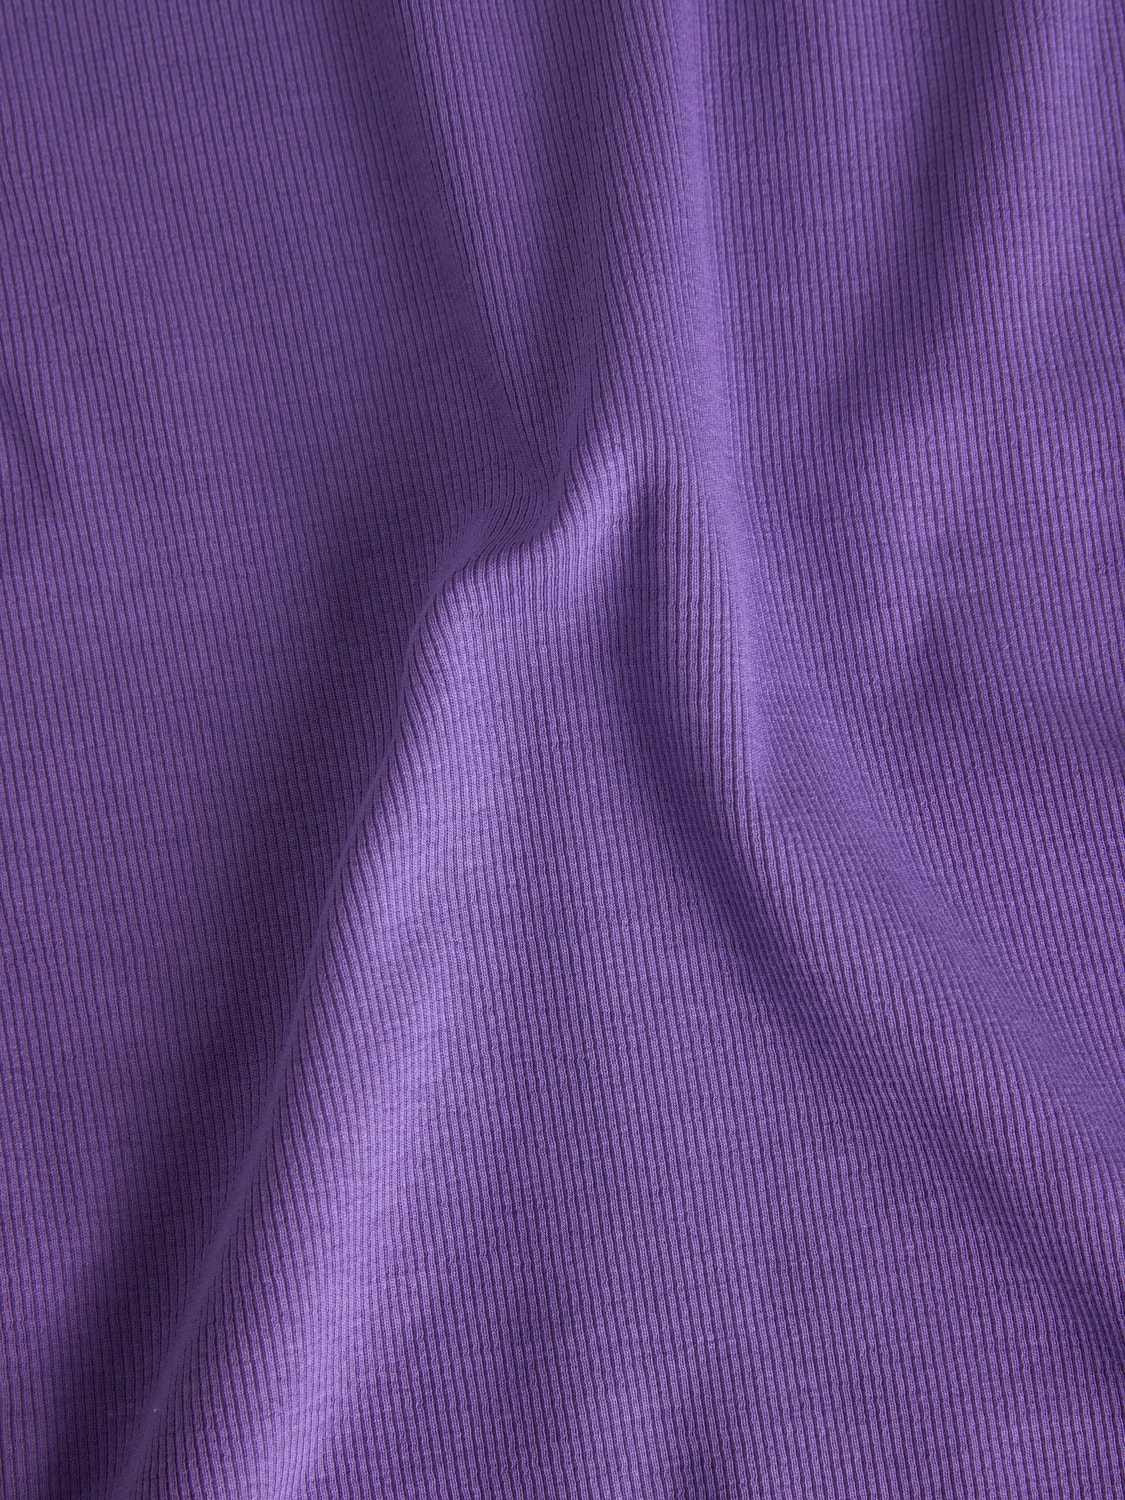 JJXX JXFOREST Šaty -Royal Lilac - 12224660